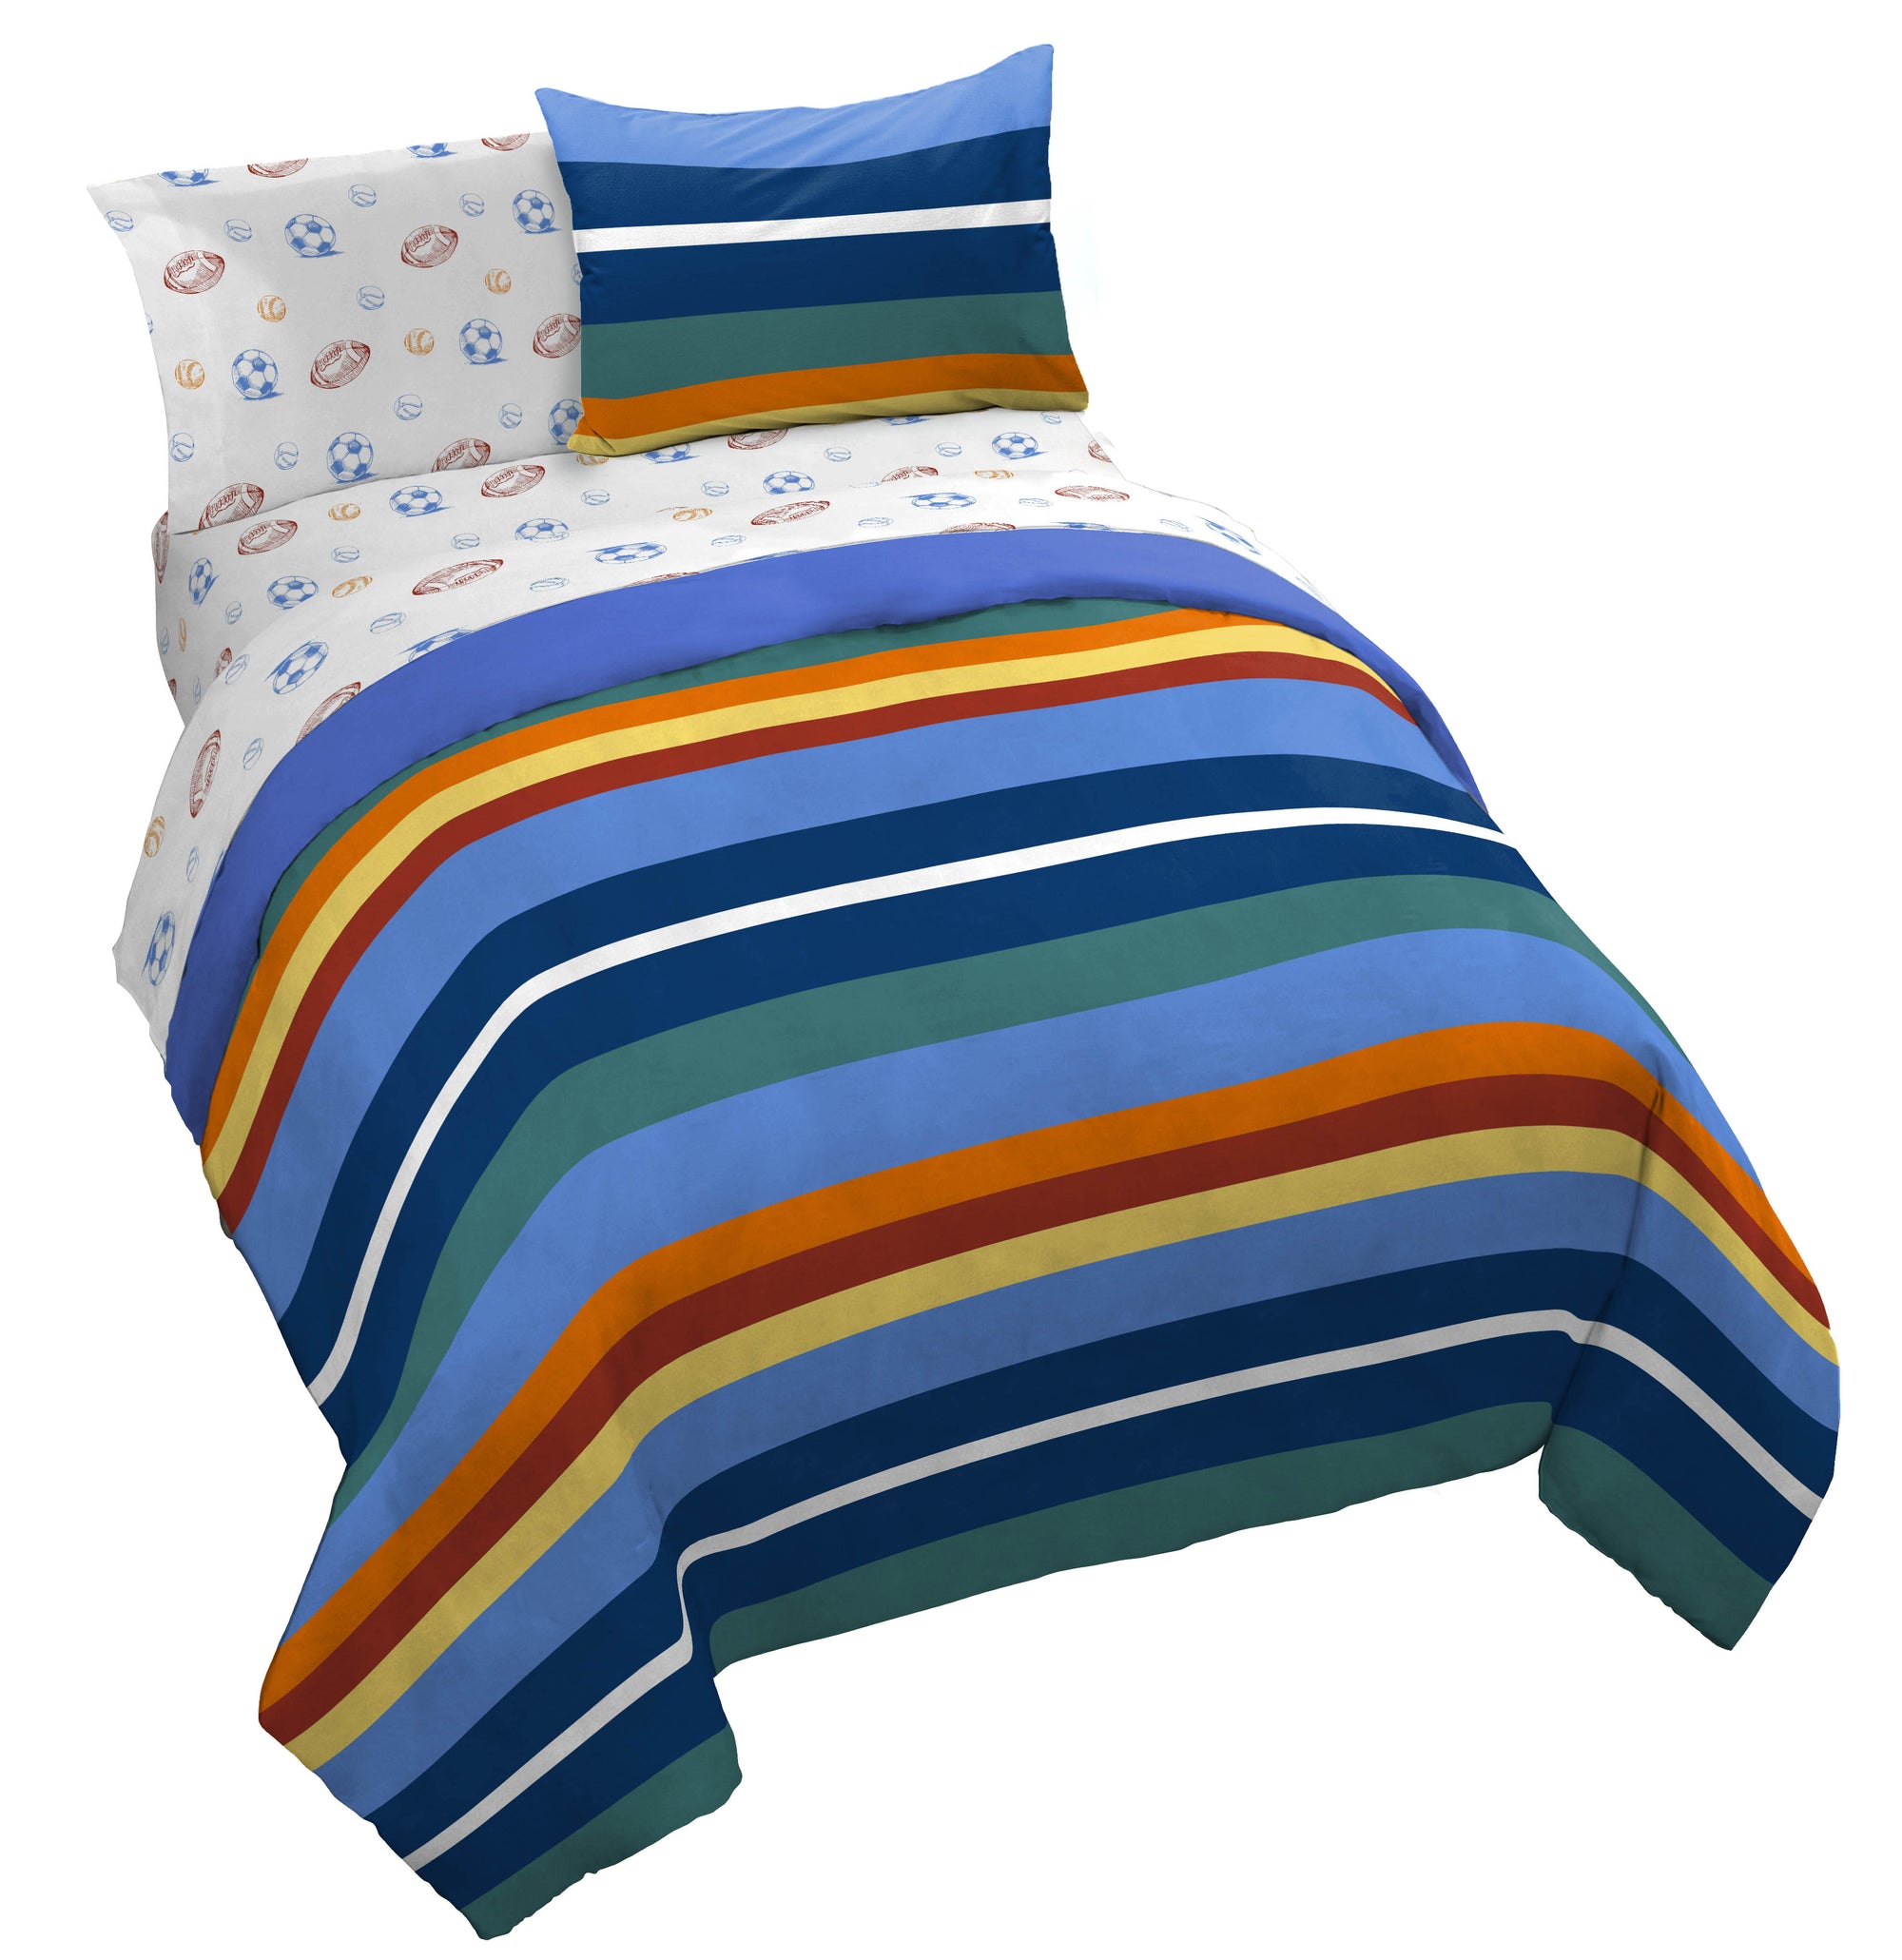 Saturday Park Vintage Stripe & Sports 100% Organic Cotton Bed Set